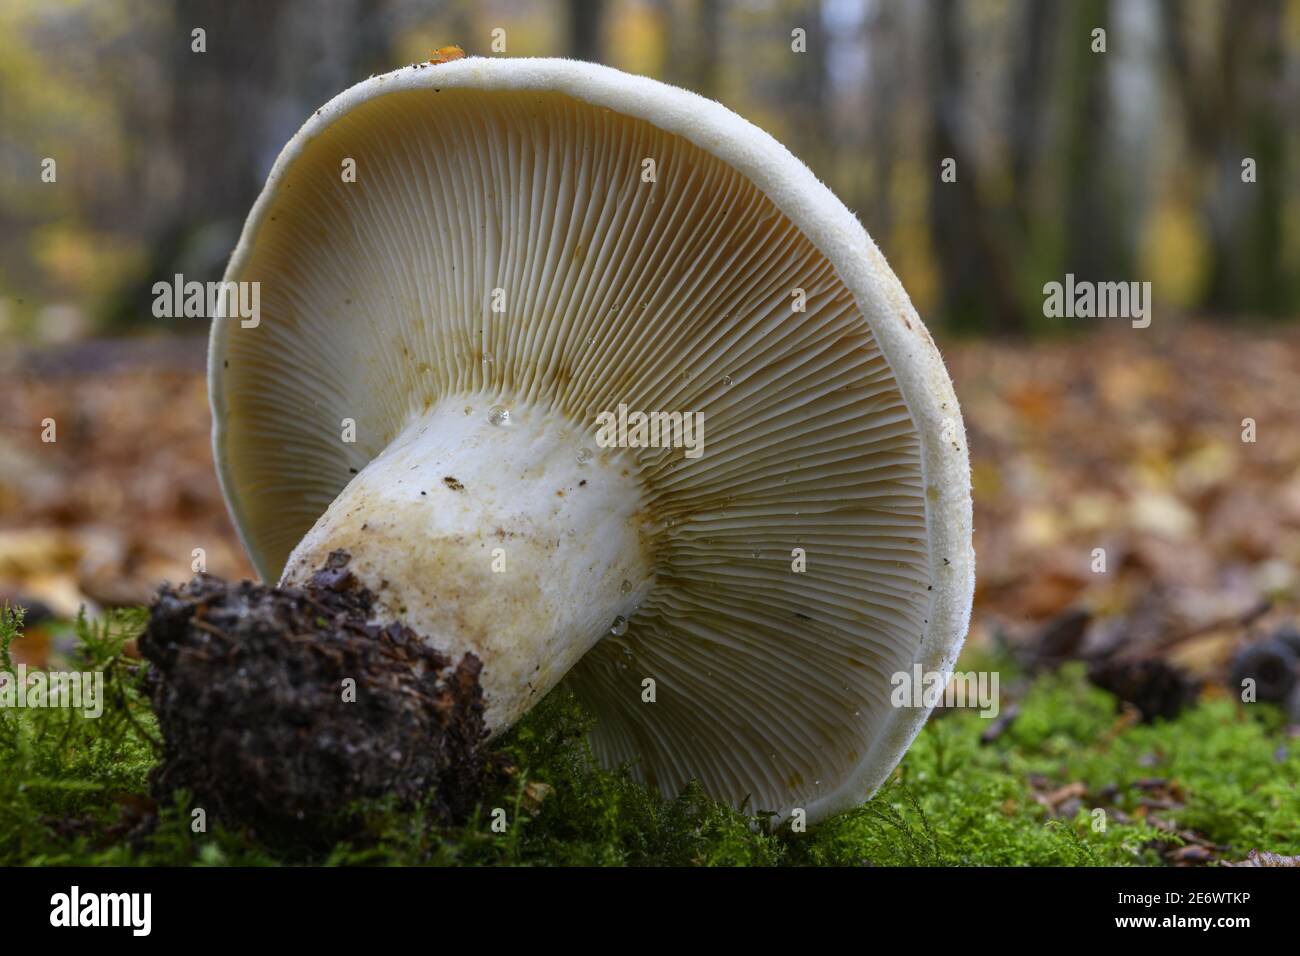 France, Somme (80), Cr?cy-en-Ponthieu, Cr?cy forest, Mushroom, Lactarius vellereus Stock Photo